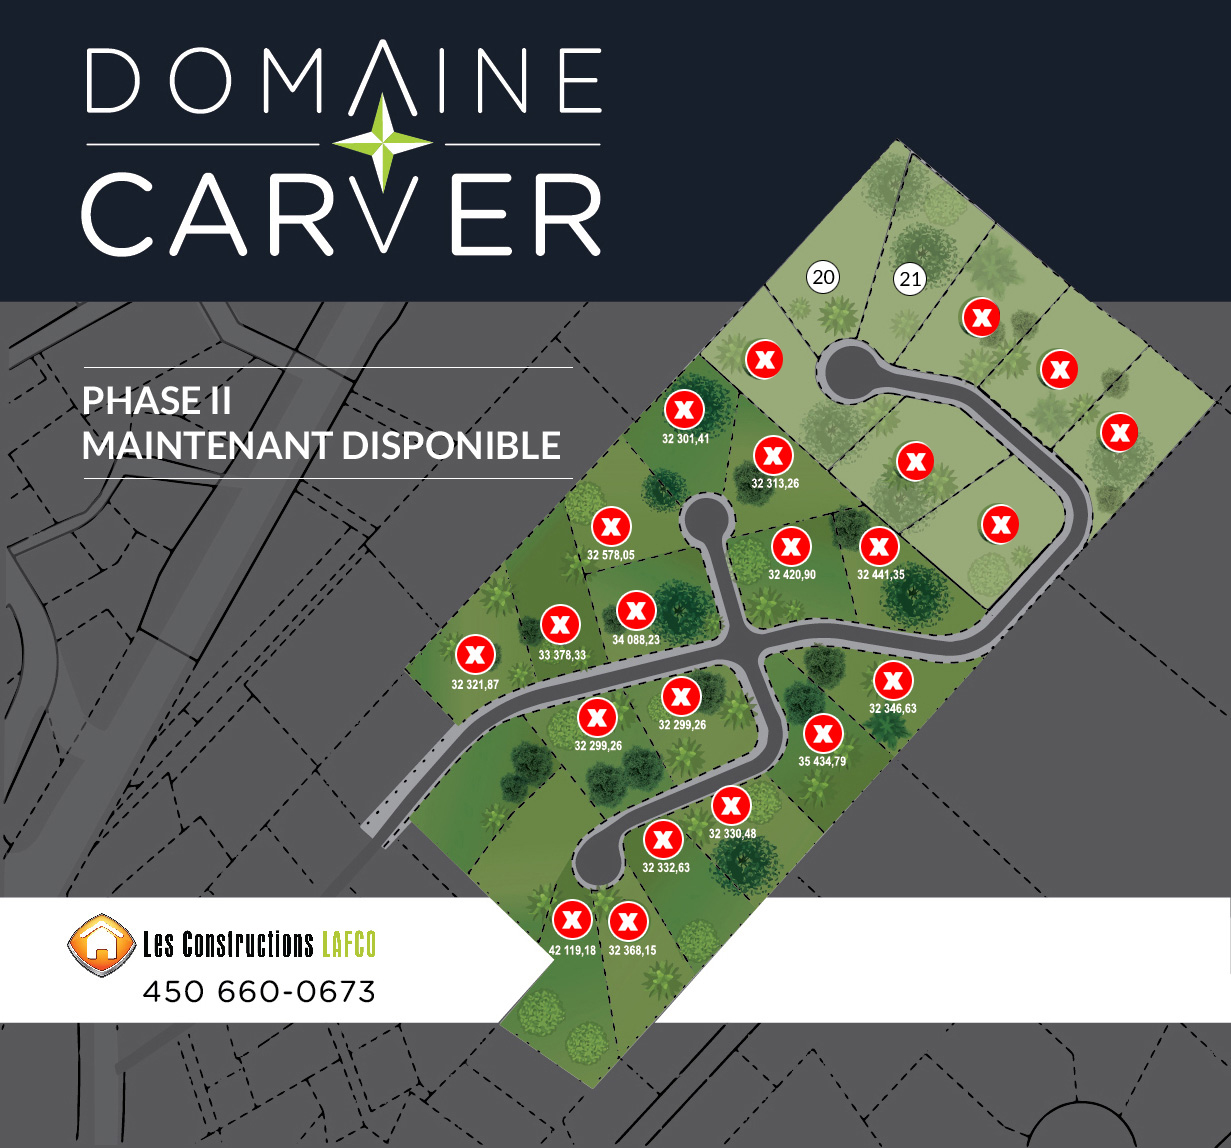 Domaine Carver